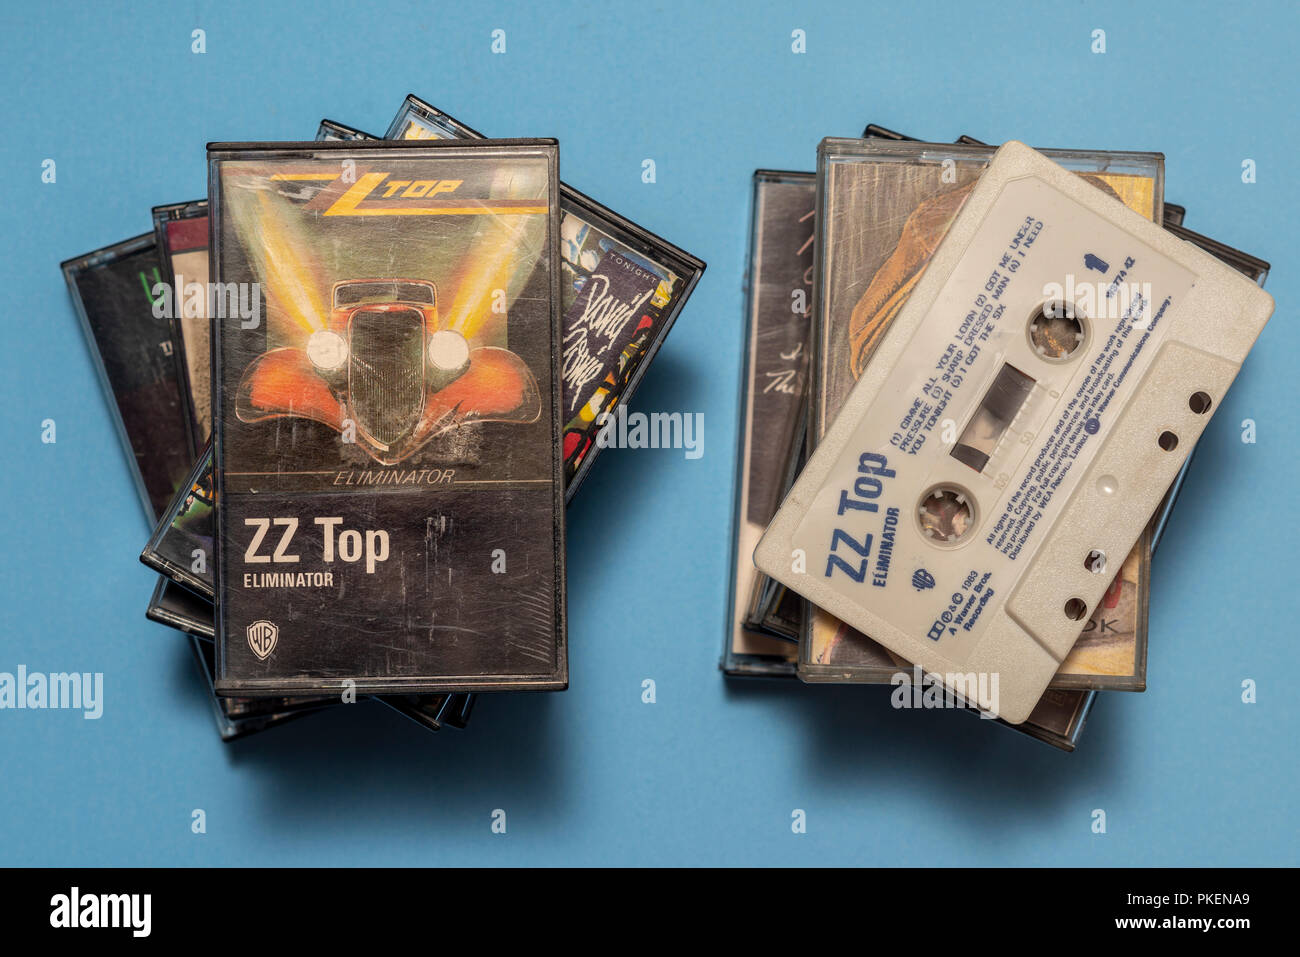 Compact audio casette of ZZ Top Eliminator album with art work. Stock Photo